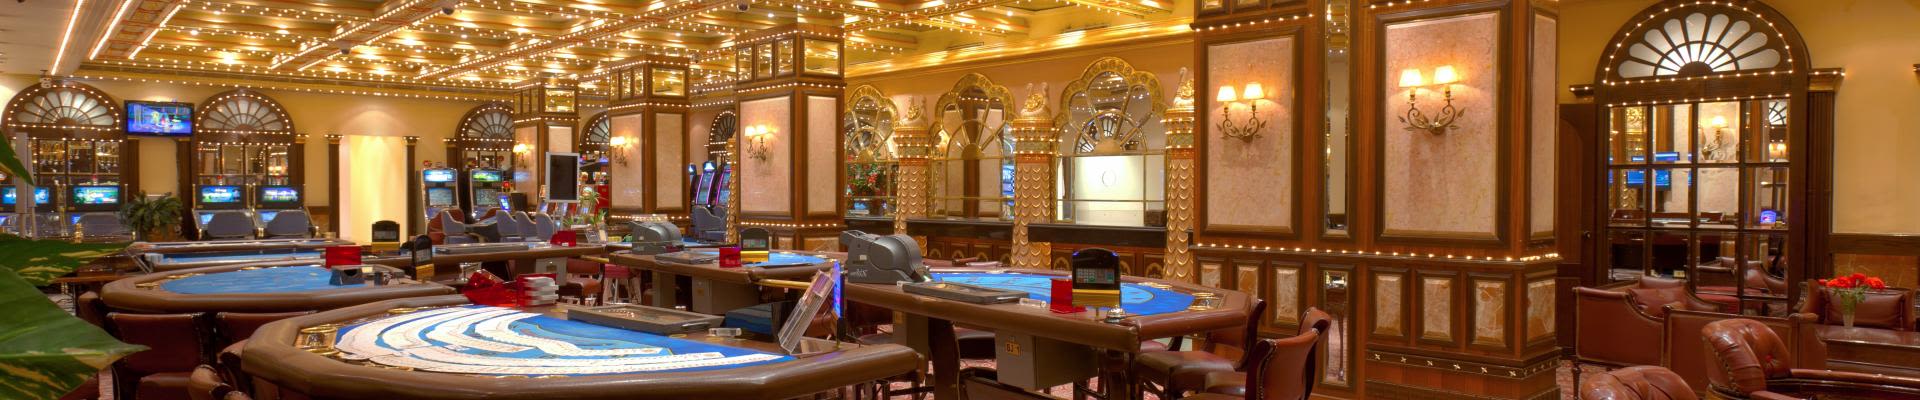 sonesta hotel tower casino cairo booking com